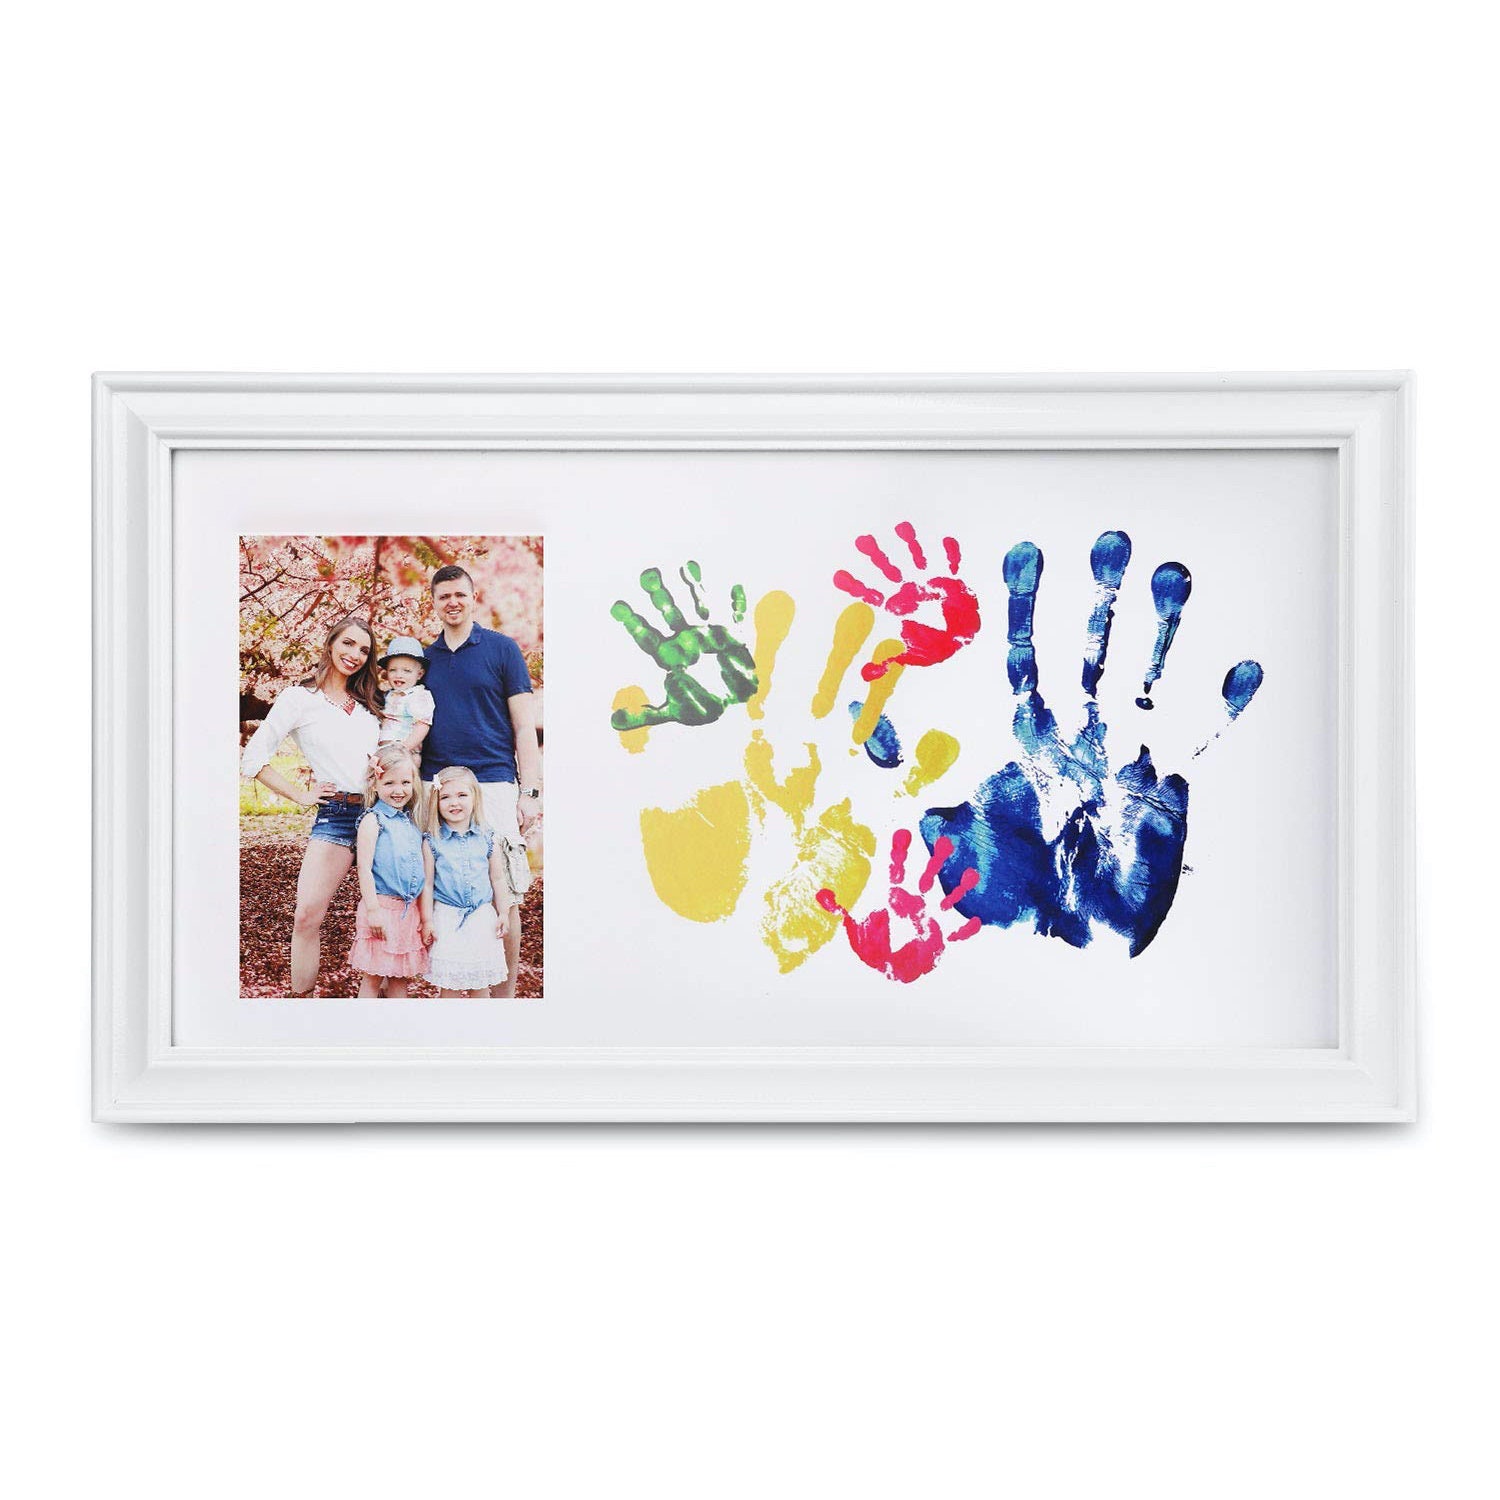  DAMLUX Family Handprint Kit,DIY Art Print Keepsake